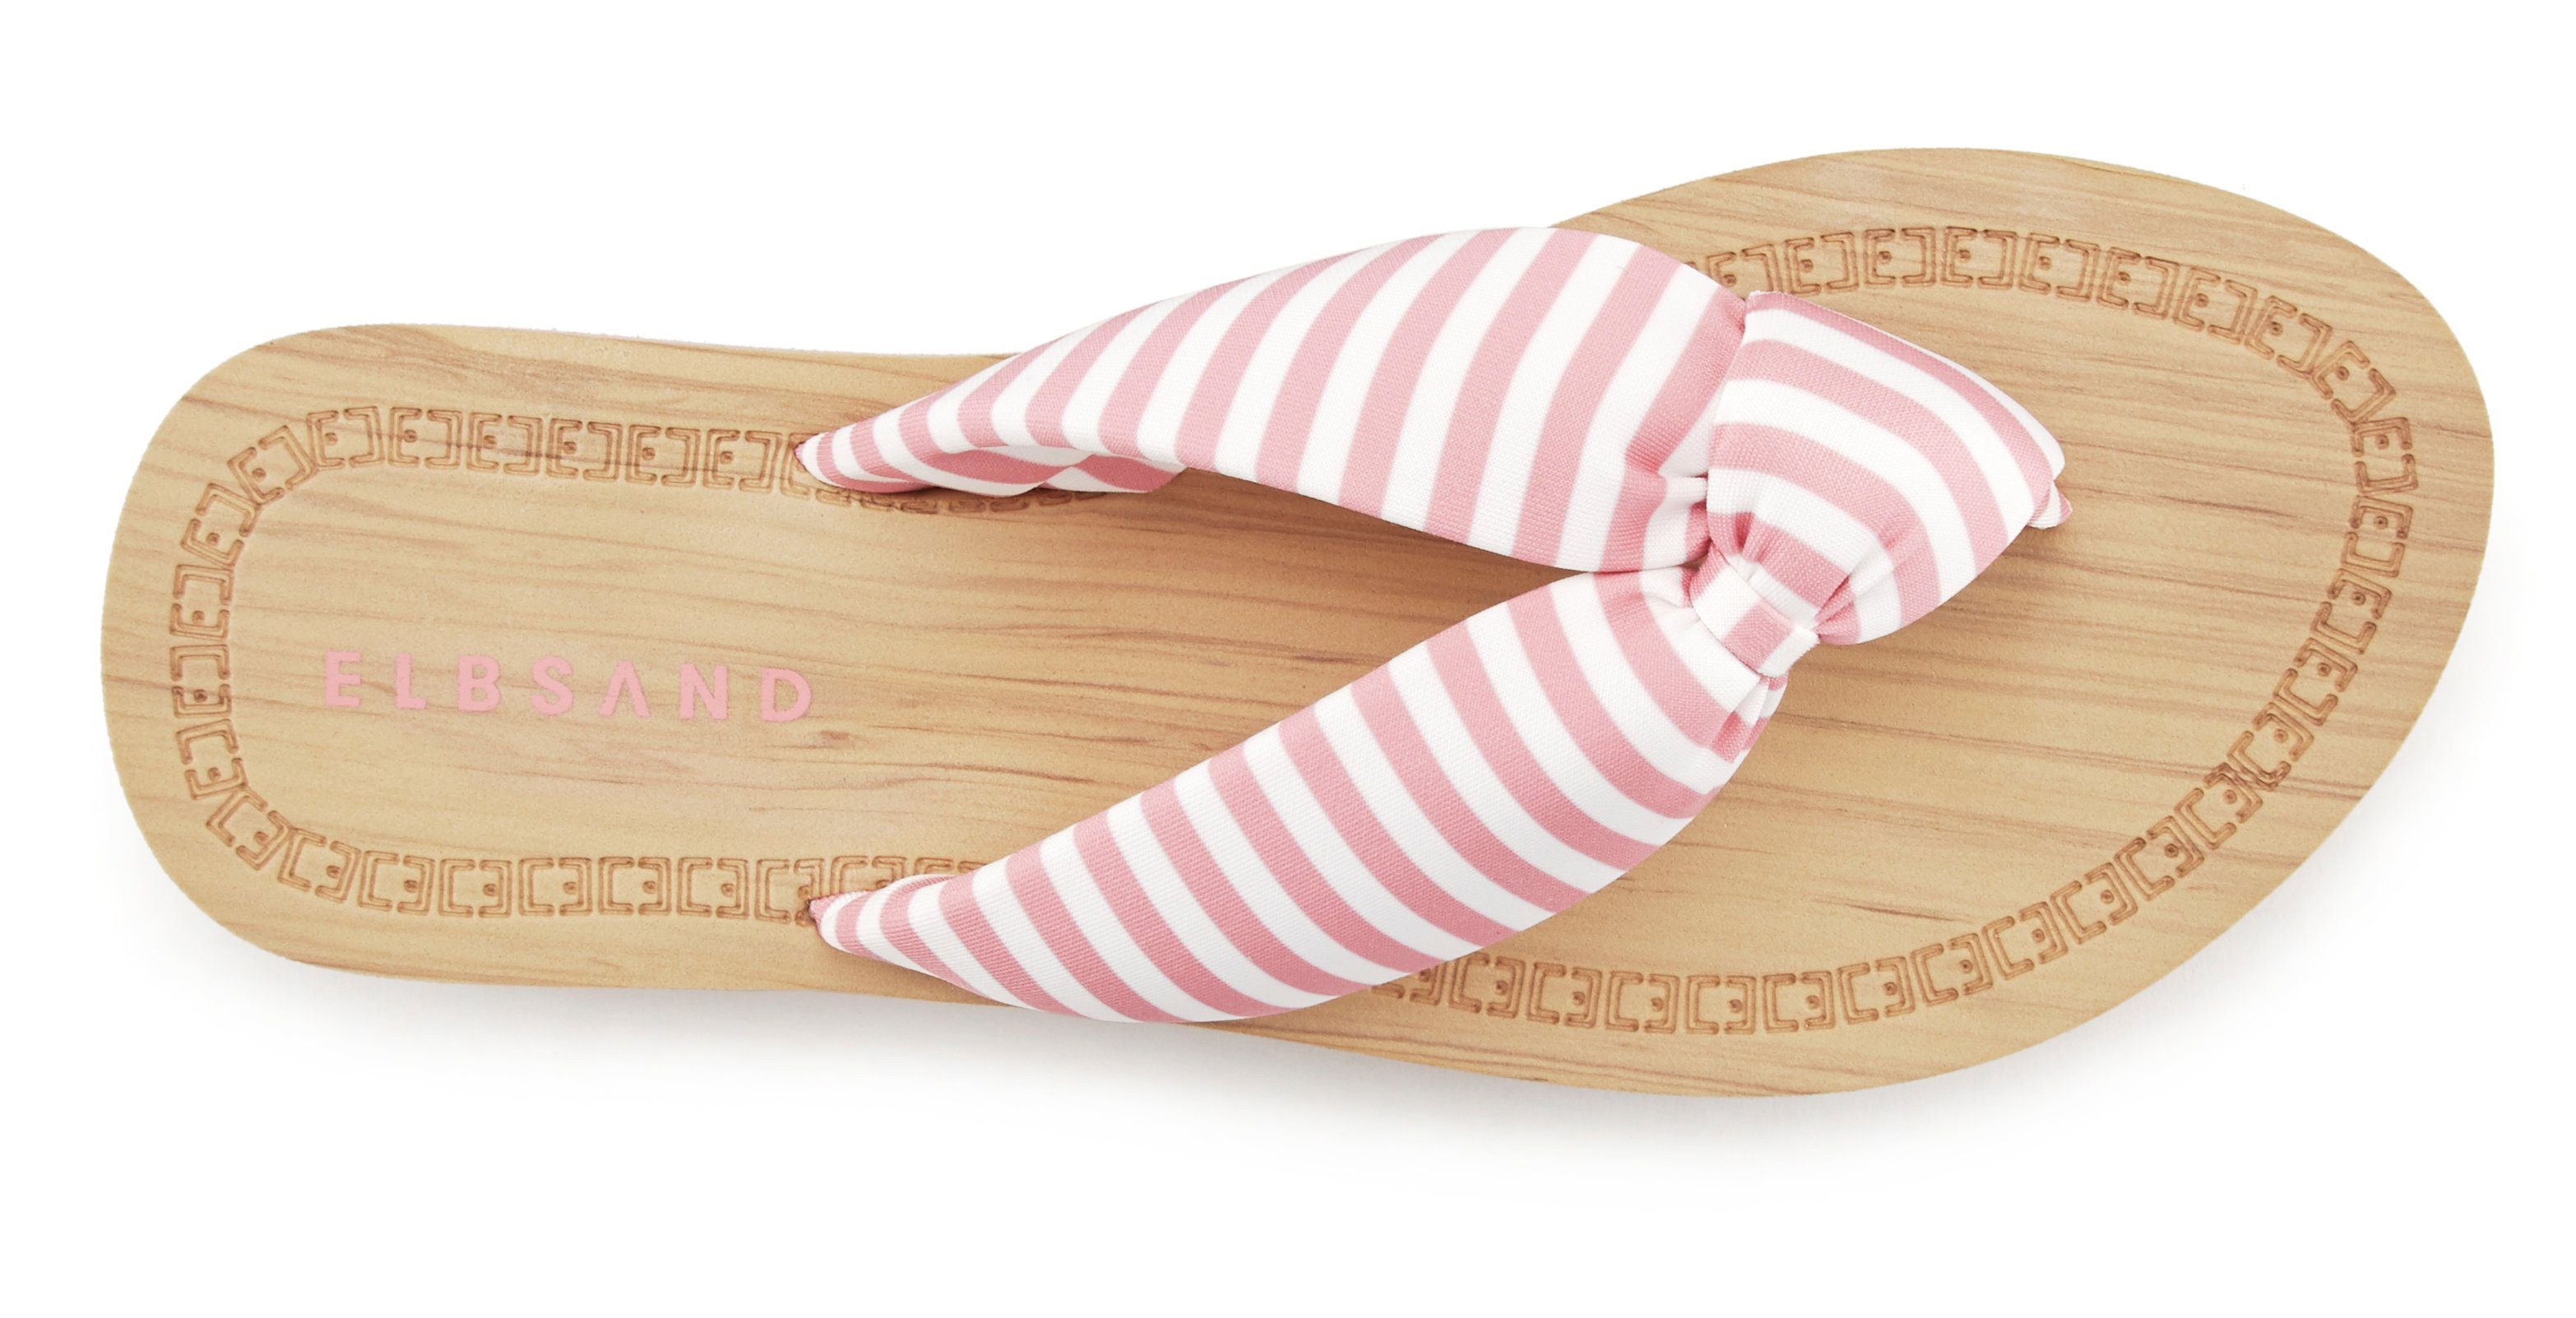 Elbsand Badezehentrenner Sandale, Pantolette, Badeschuh rosa-gestreift ultraleicht VEGAN